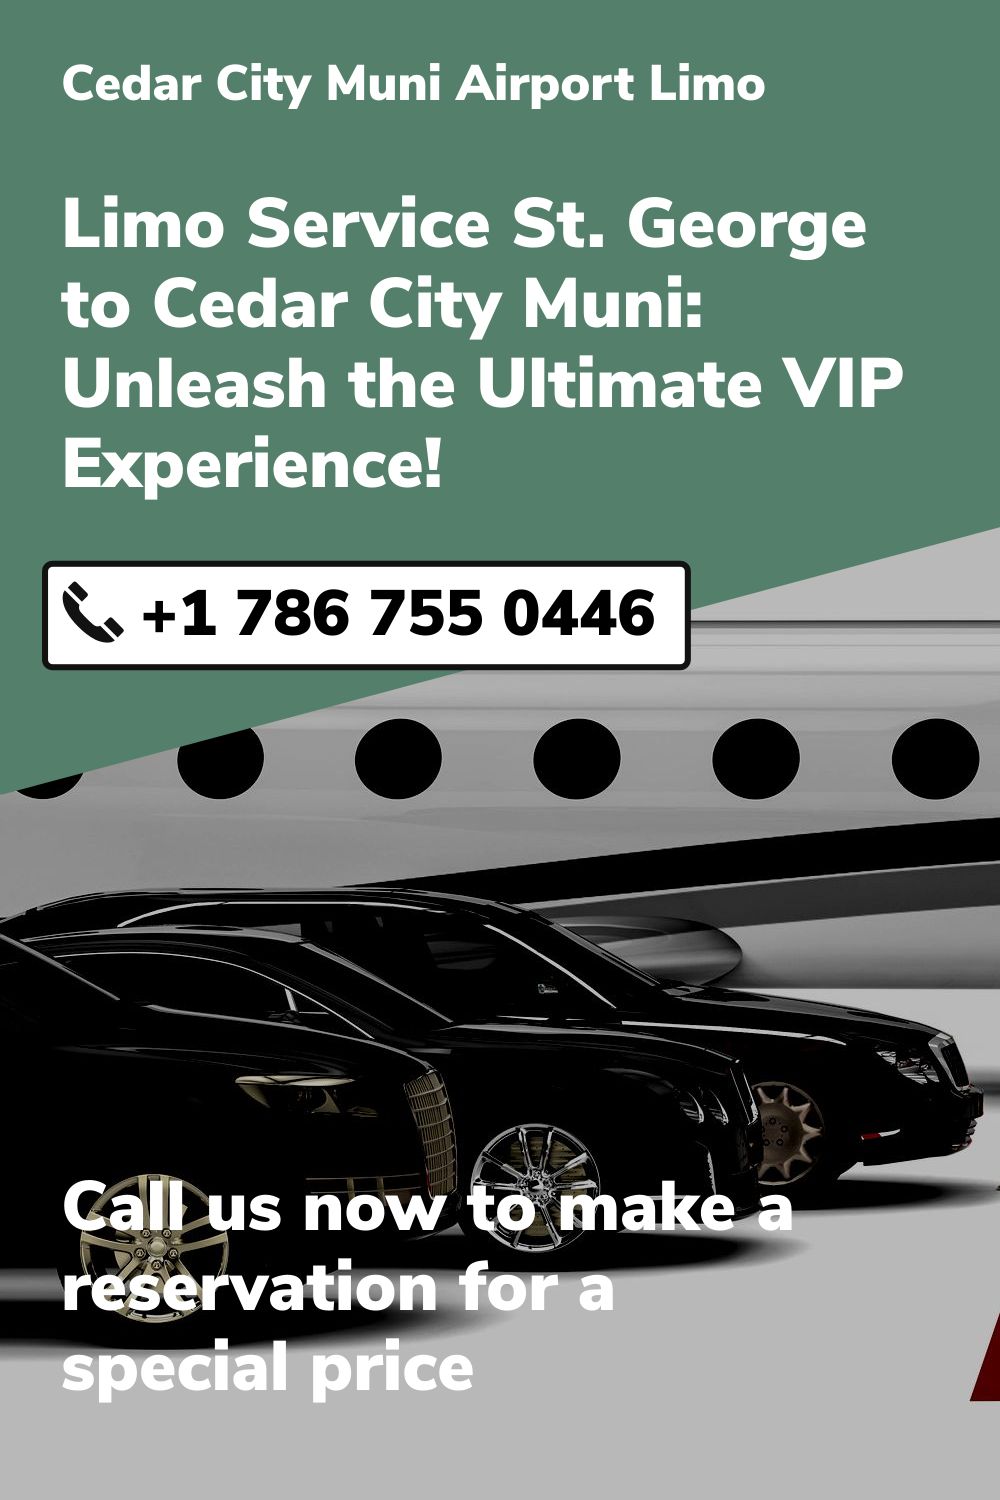 Cedar City Muni Airport Limo